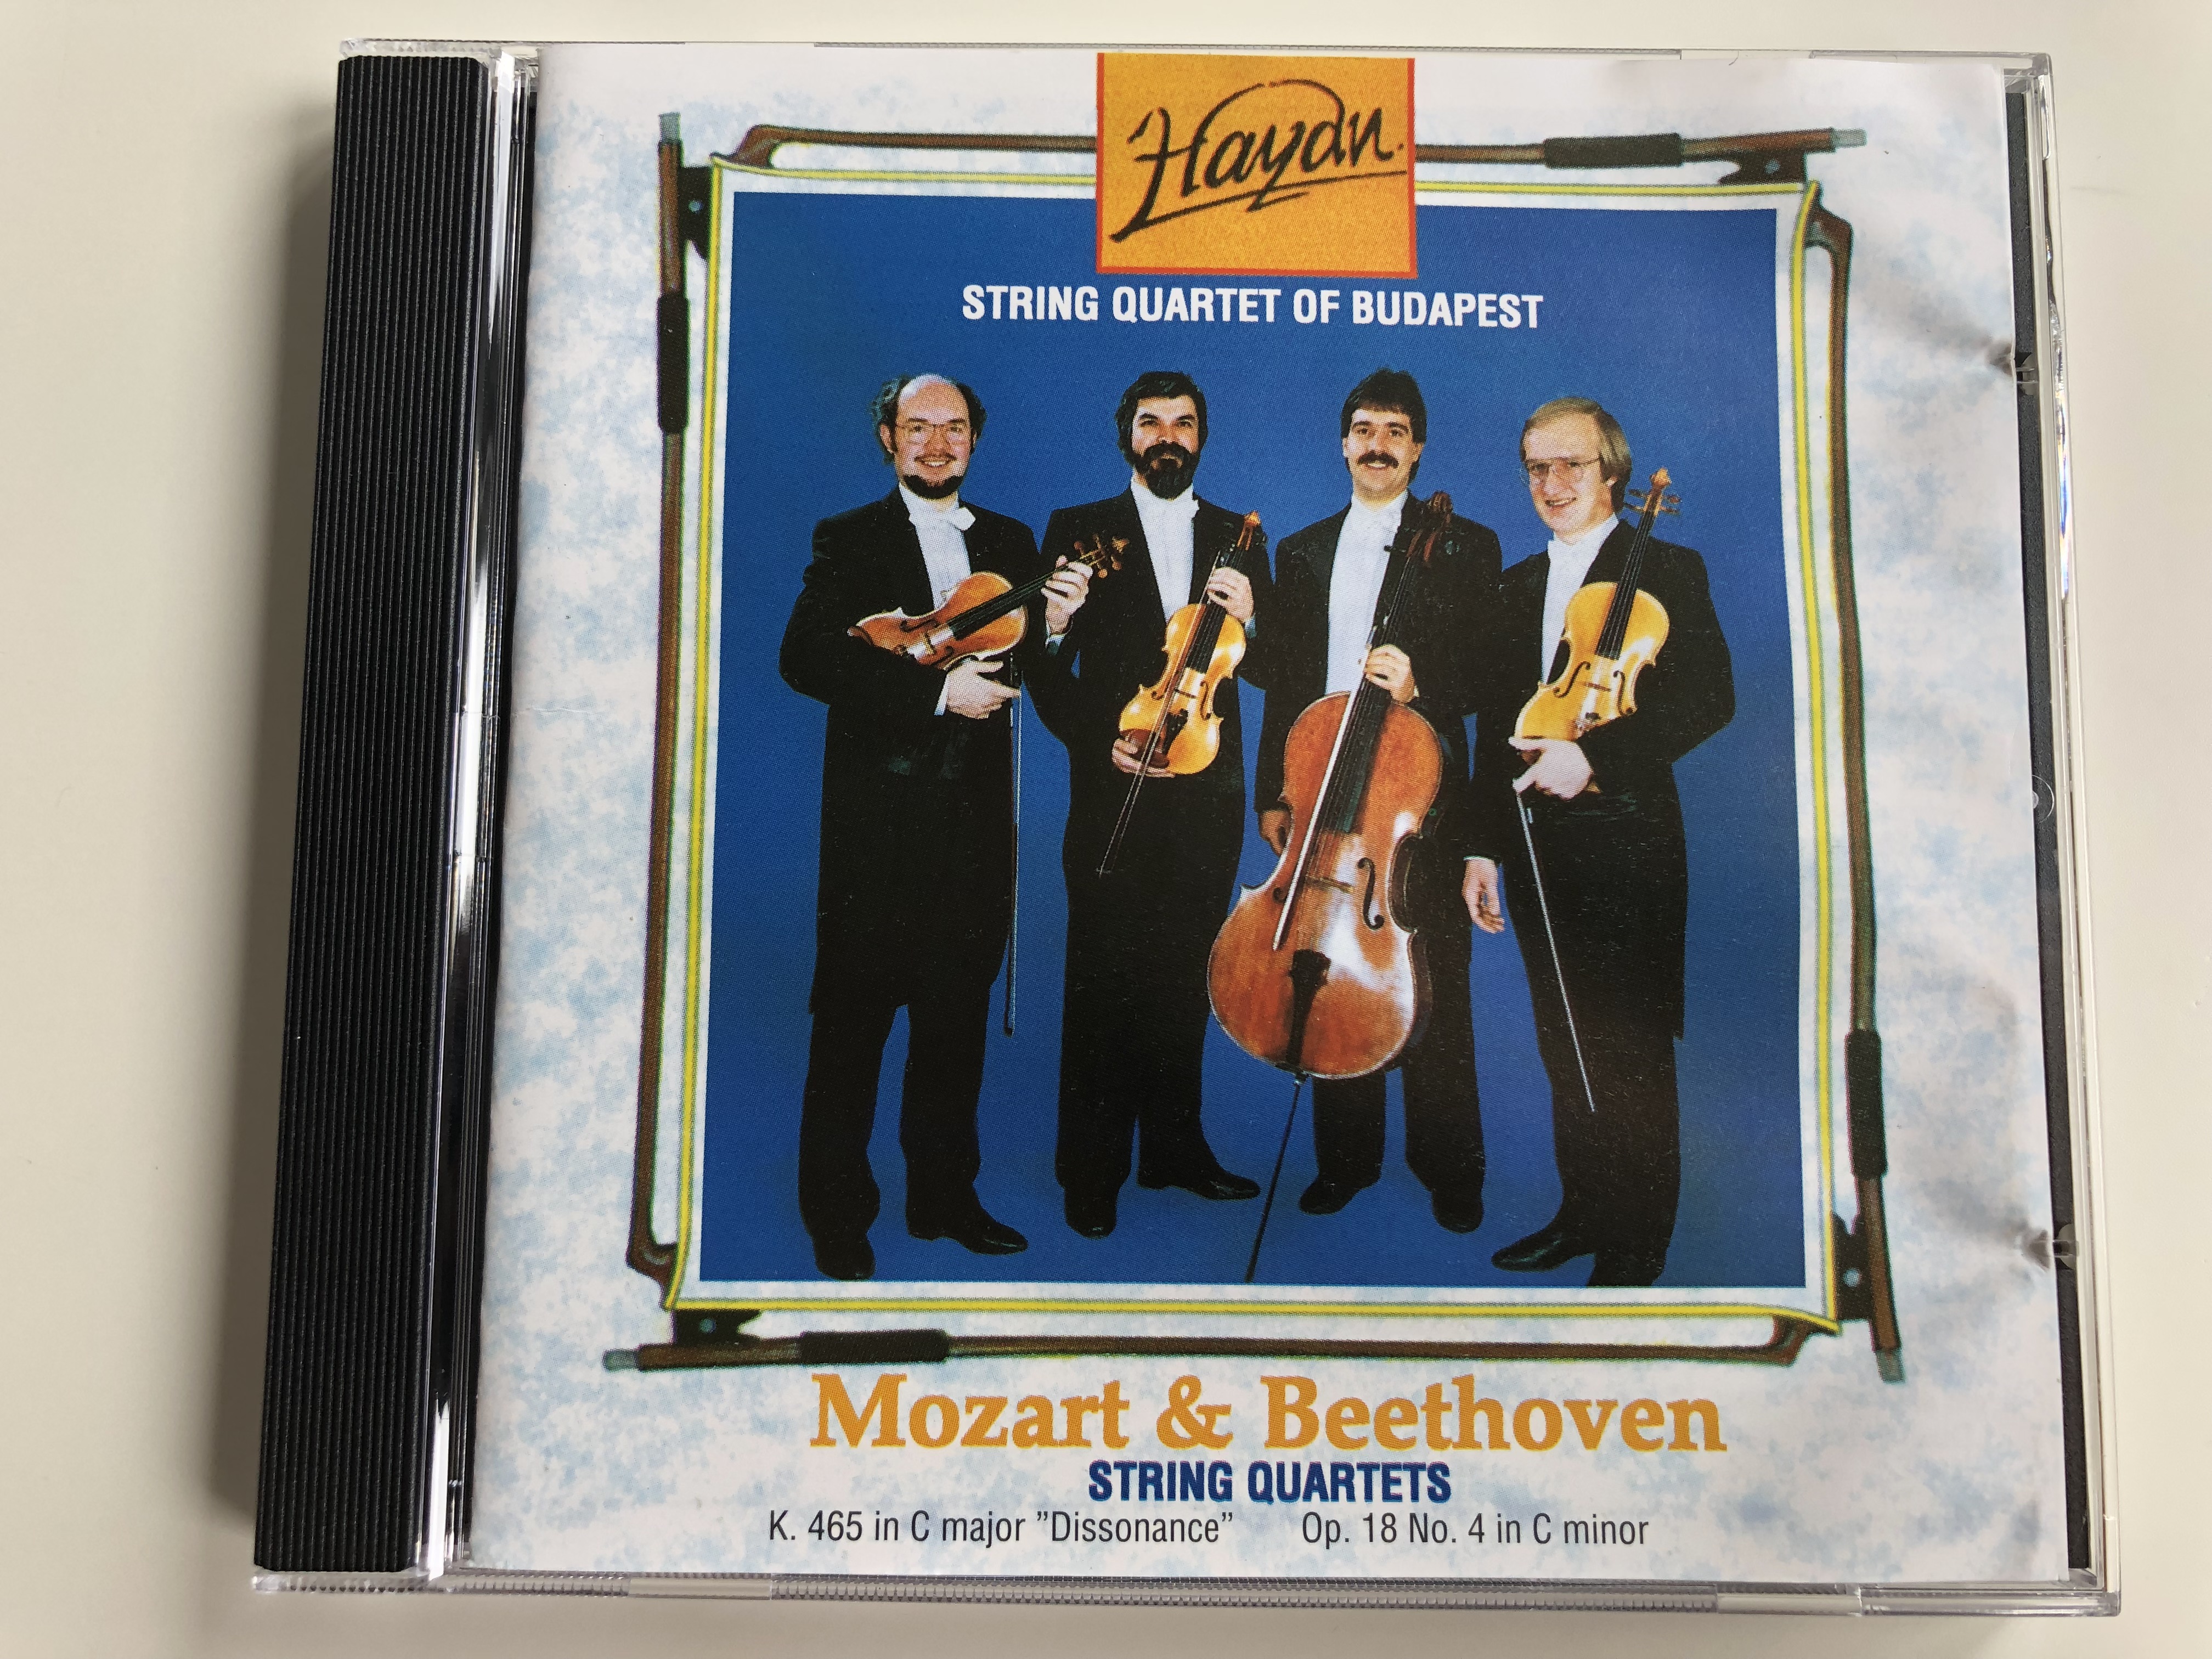 haydn-string-quartet-of-budapest-mozart-beethoven-string-quartets-k.-465-in-c-major-dissonance-op.-18-no.4-in-c-minor-audio-cd-1992-bhq-001-1-.jpg